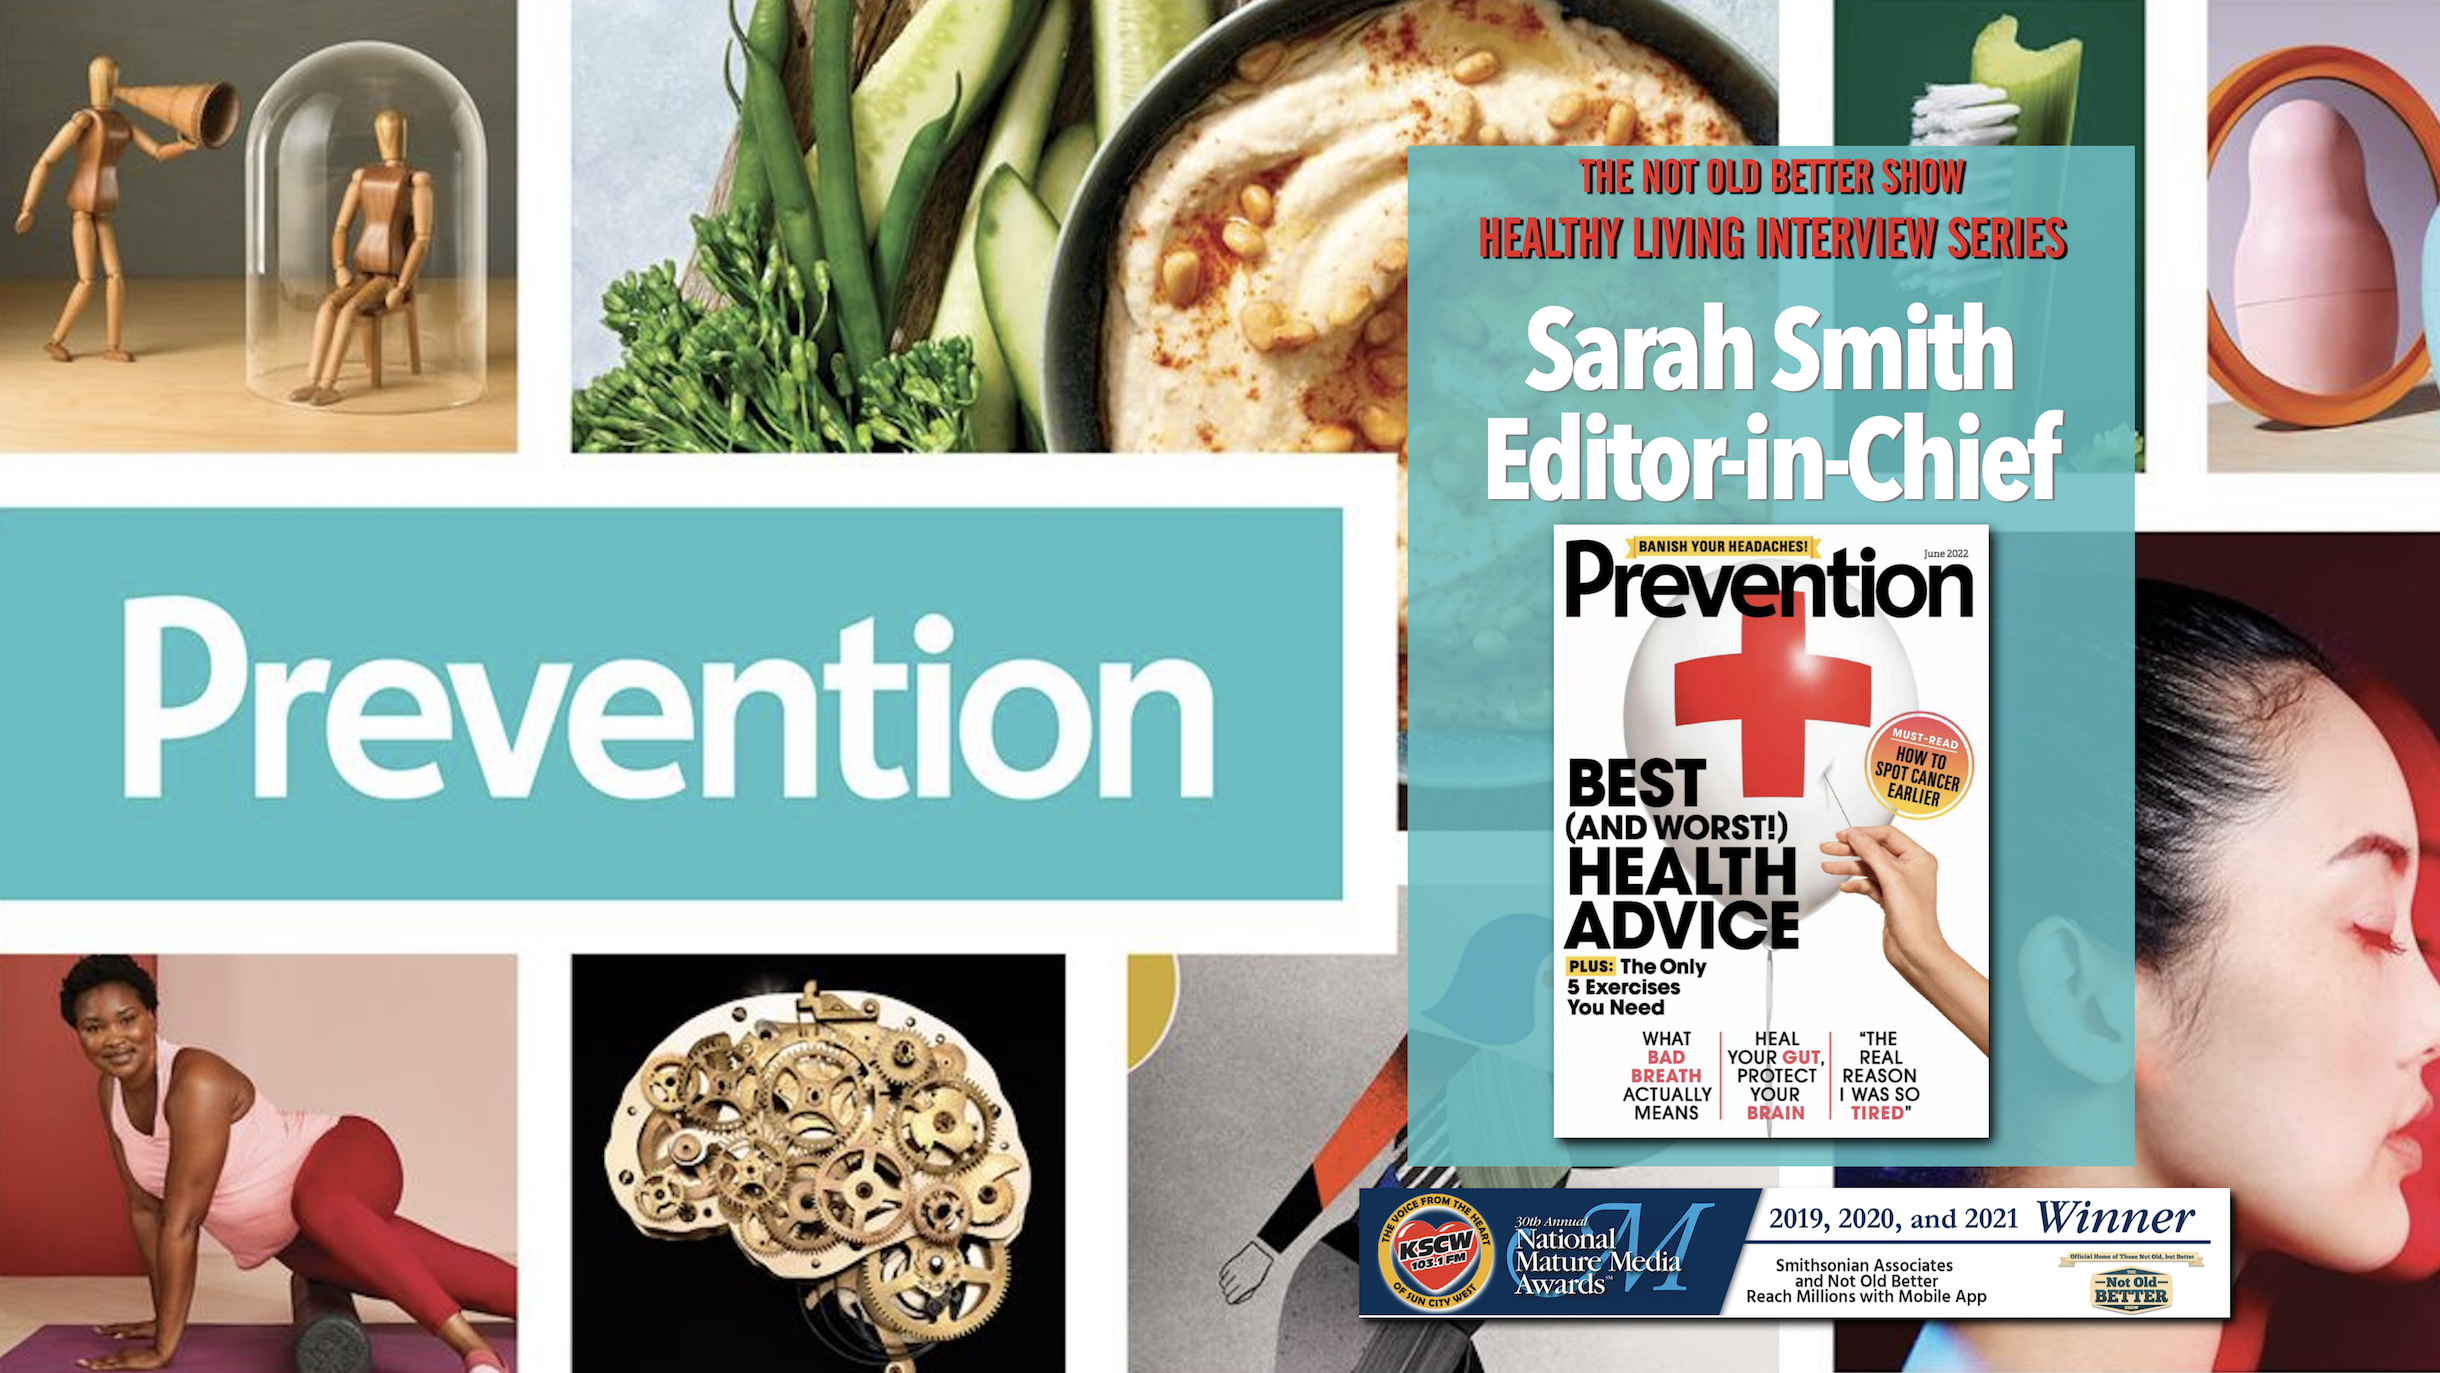 PREVENTION MAGAZINE – Sarah Smith Editor-In-Chief